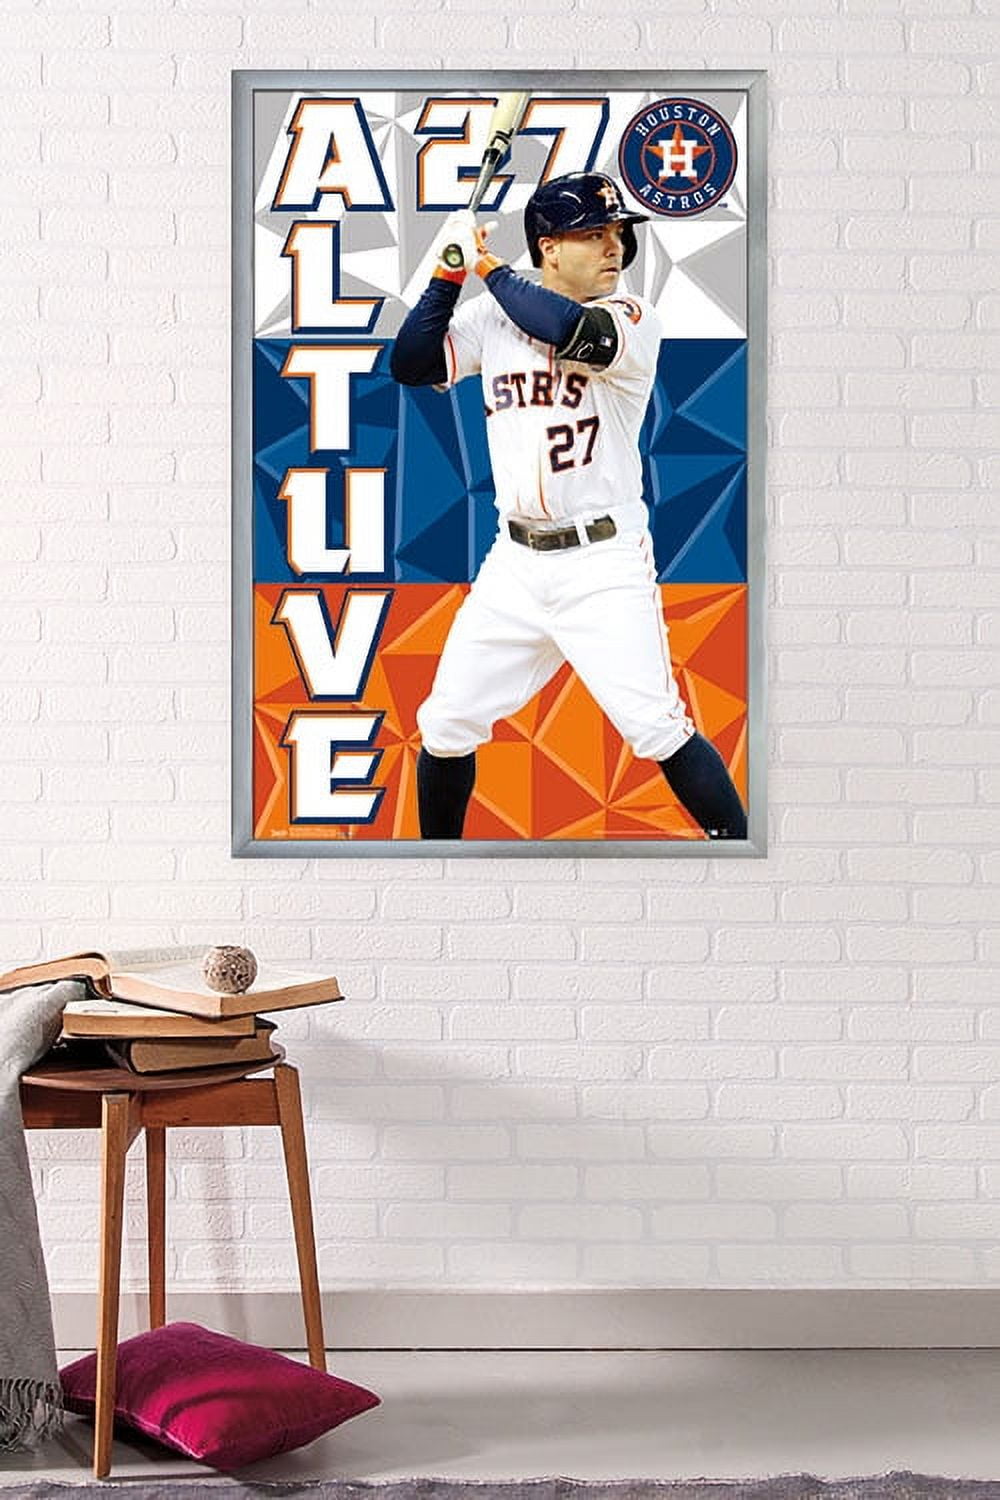 MLB Houston Astros - Jose Altuve 15 Wall Poster, 22.375 x 34, Framed